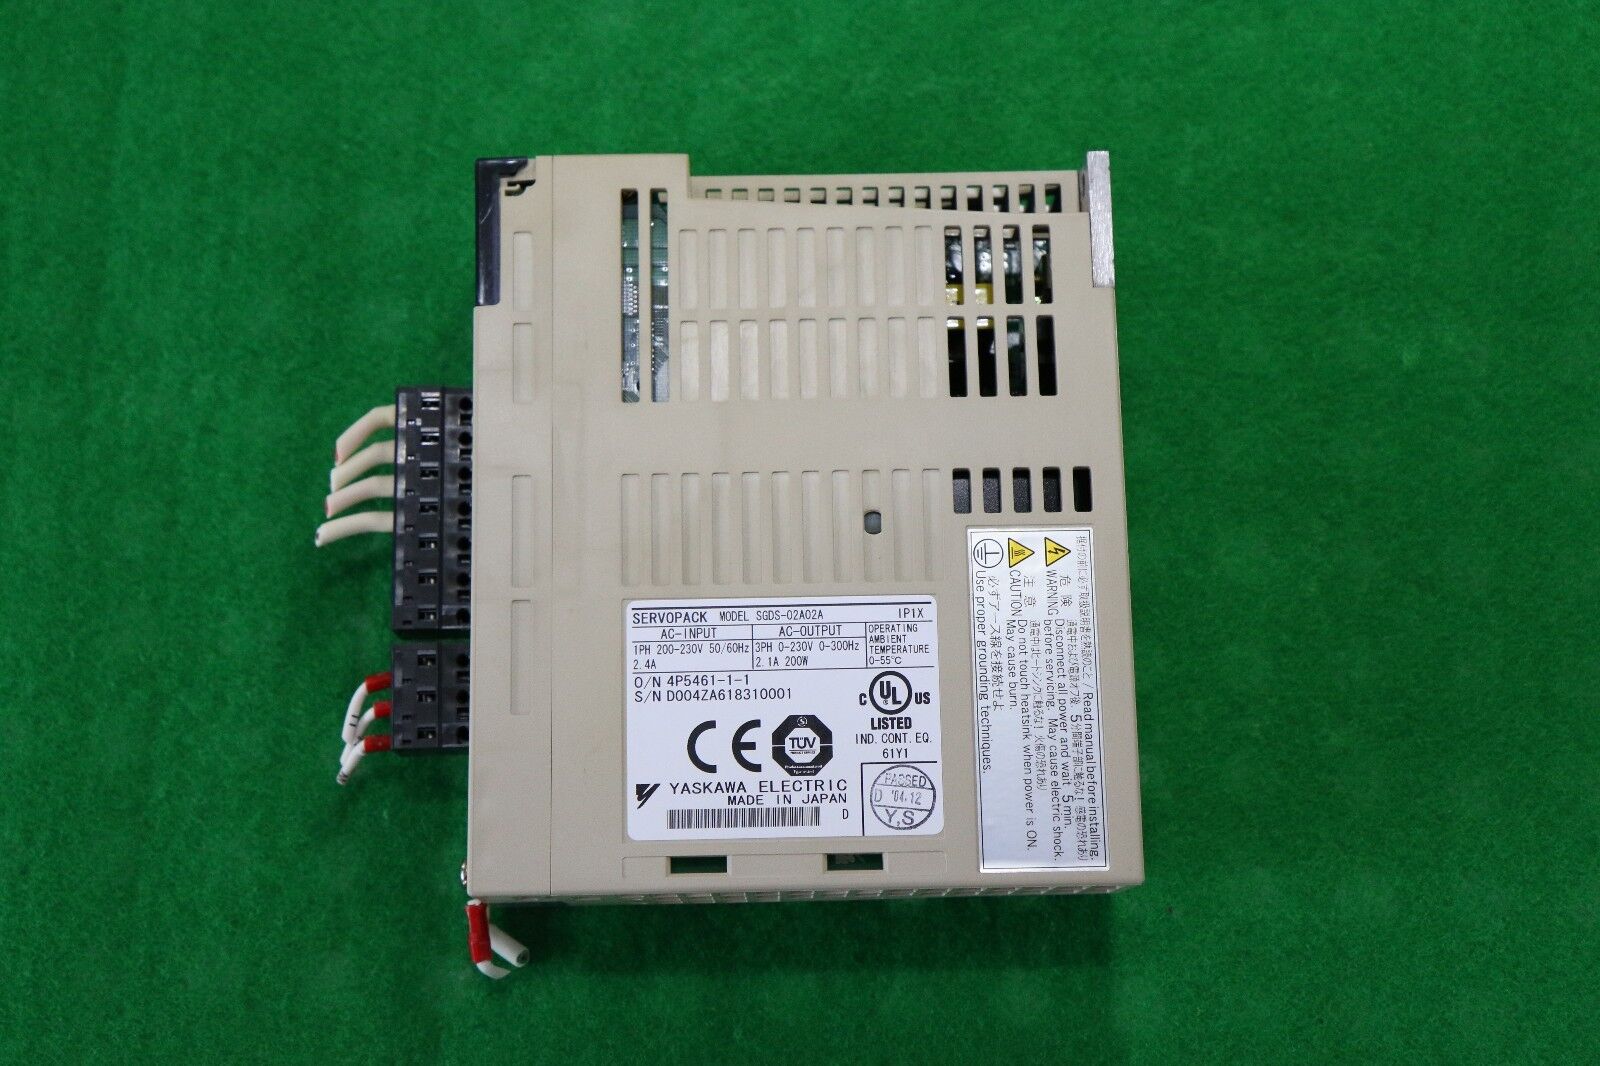 YASKAWA Used SGDS-02A02A SERVOPACK